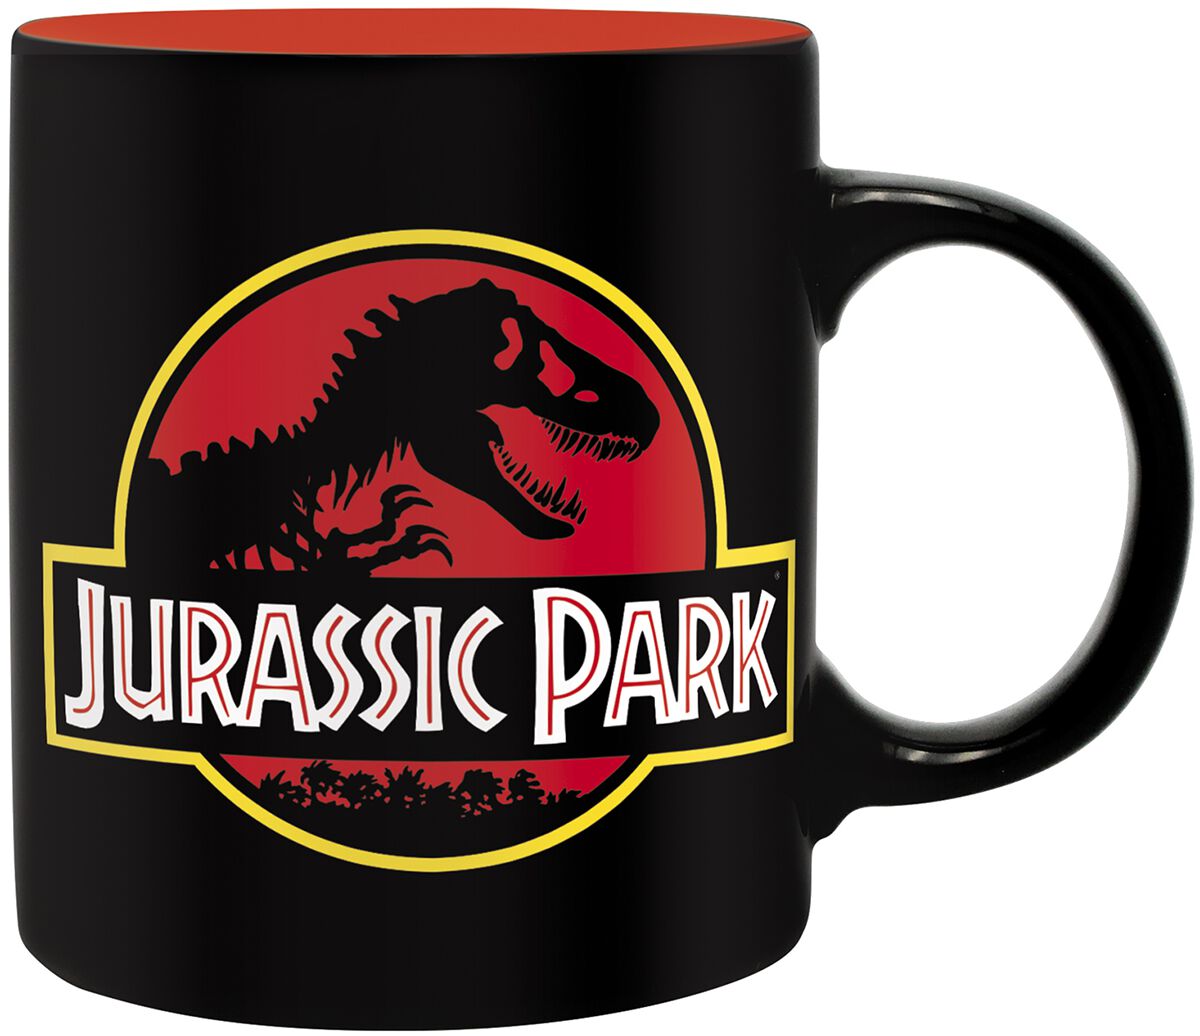 Jurassic Park T-Rex Tasse multicolor